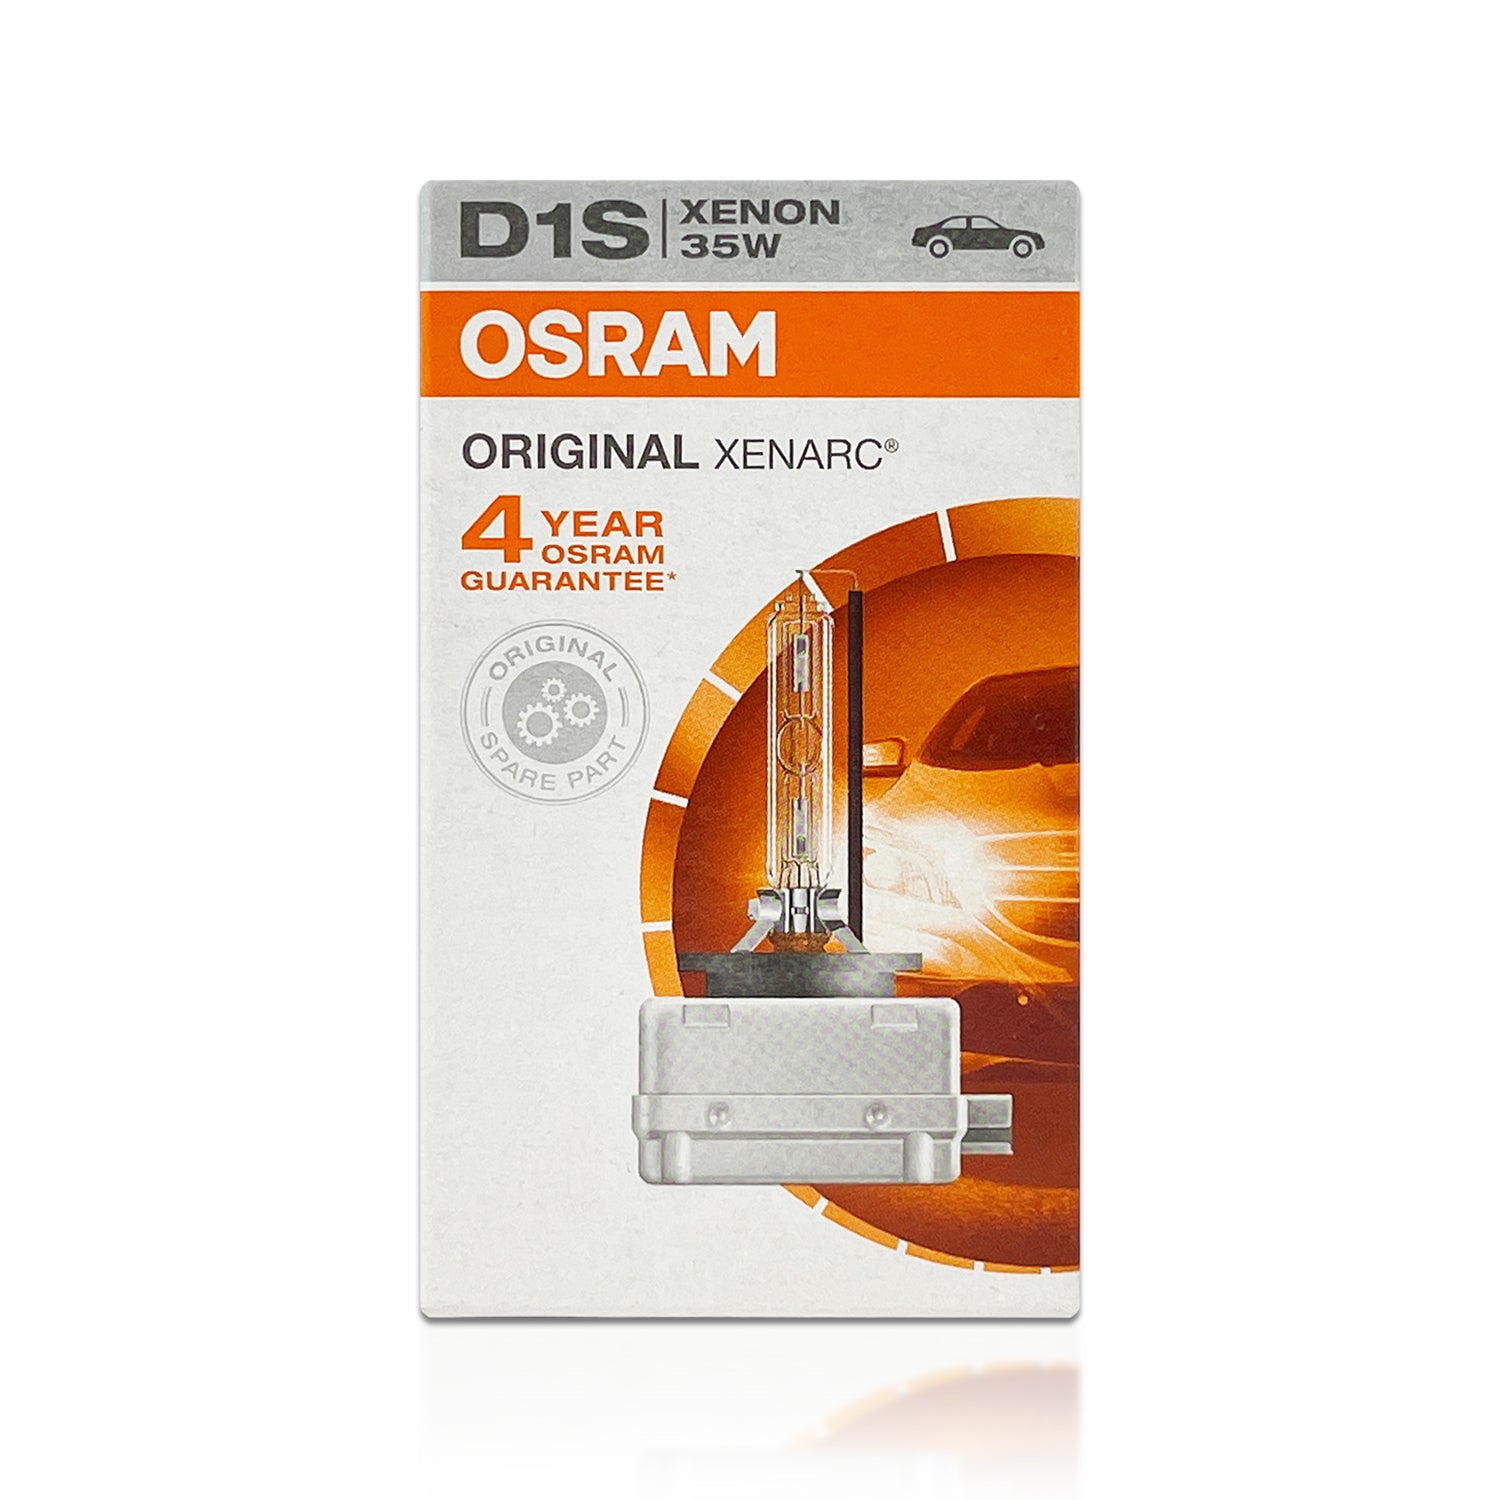 OSRAM HOME XENARC ORIGINAL, D1S, HID strålkastarlampa, xenonlampa, 66140,  85V, 4150K, Kapsel (1 Pieces)